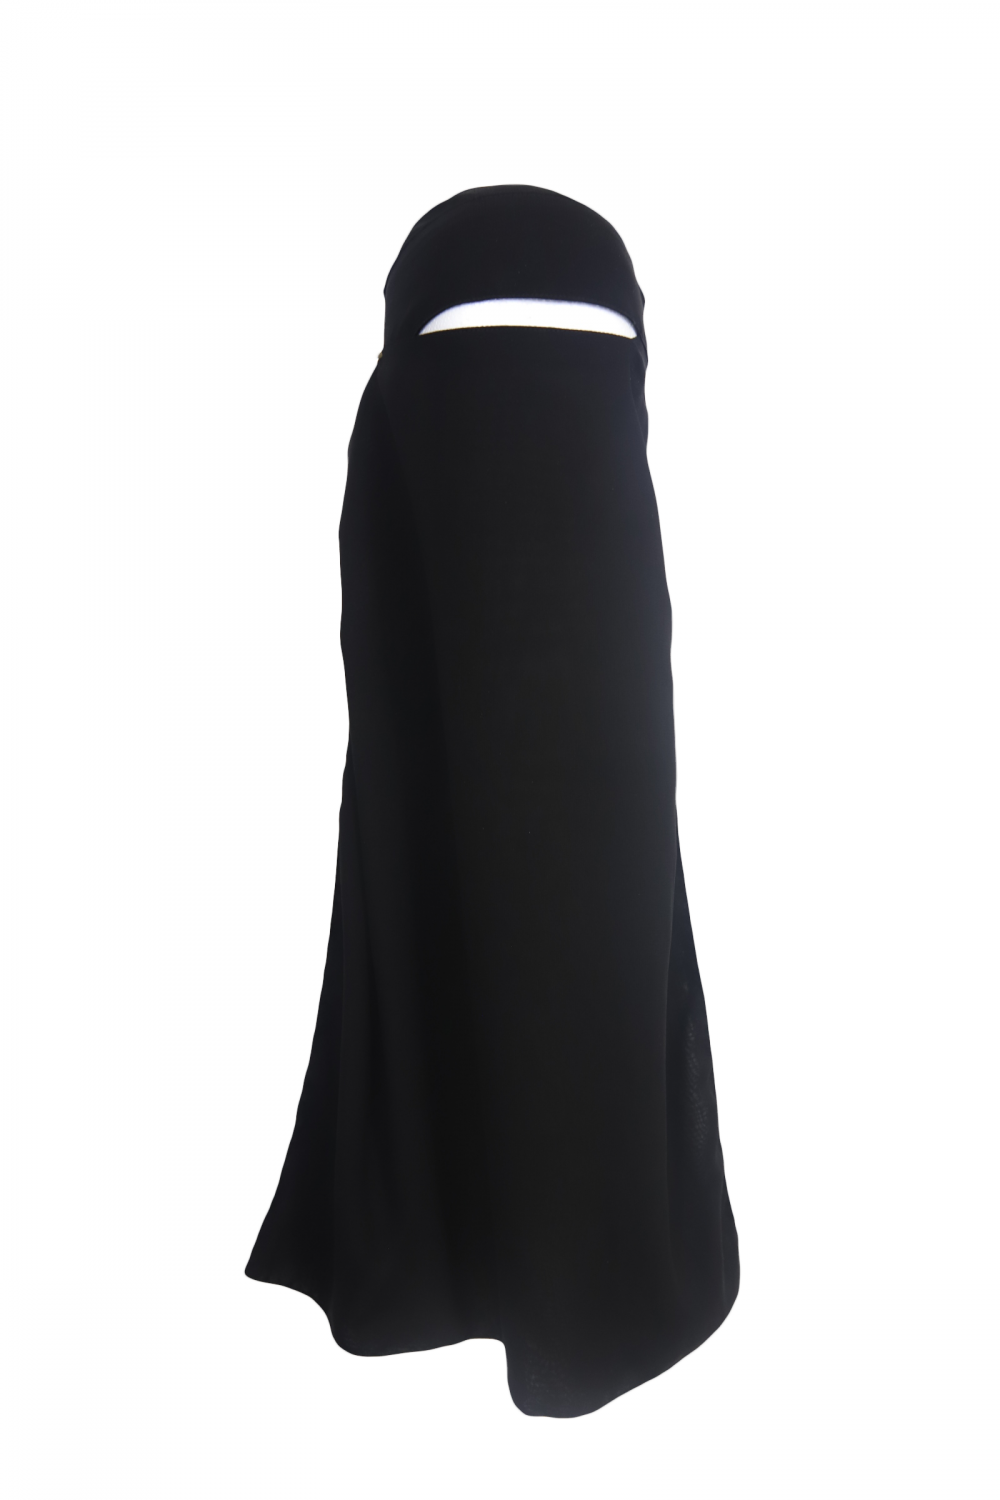 Niqab fashion online shop. Choose from a wide range of niqabs.